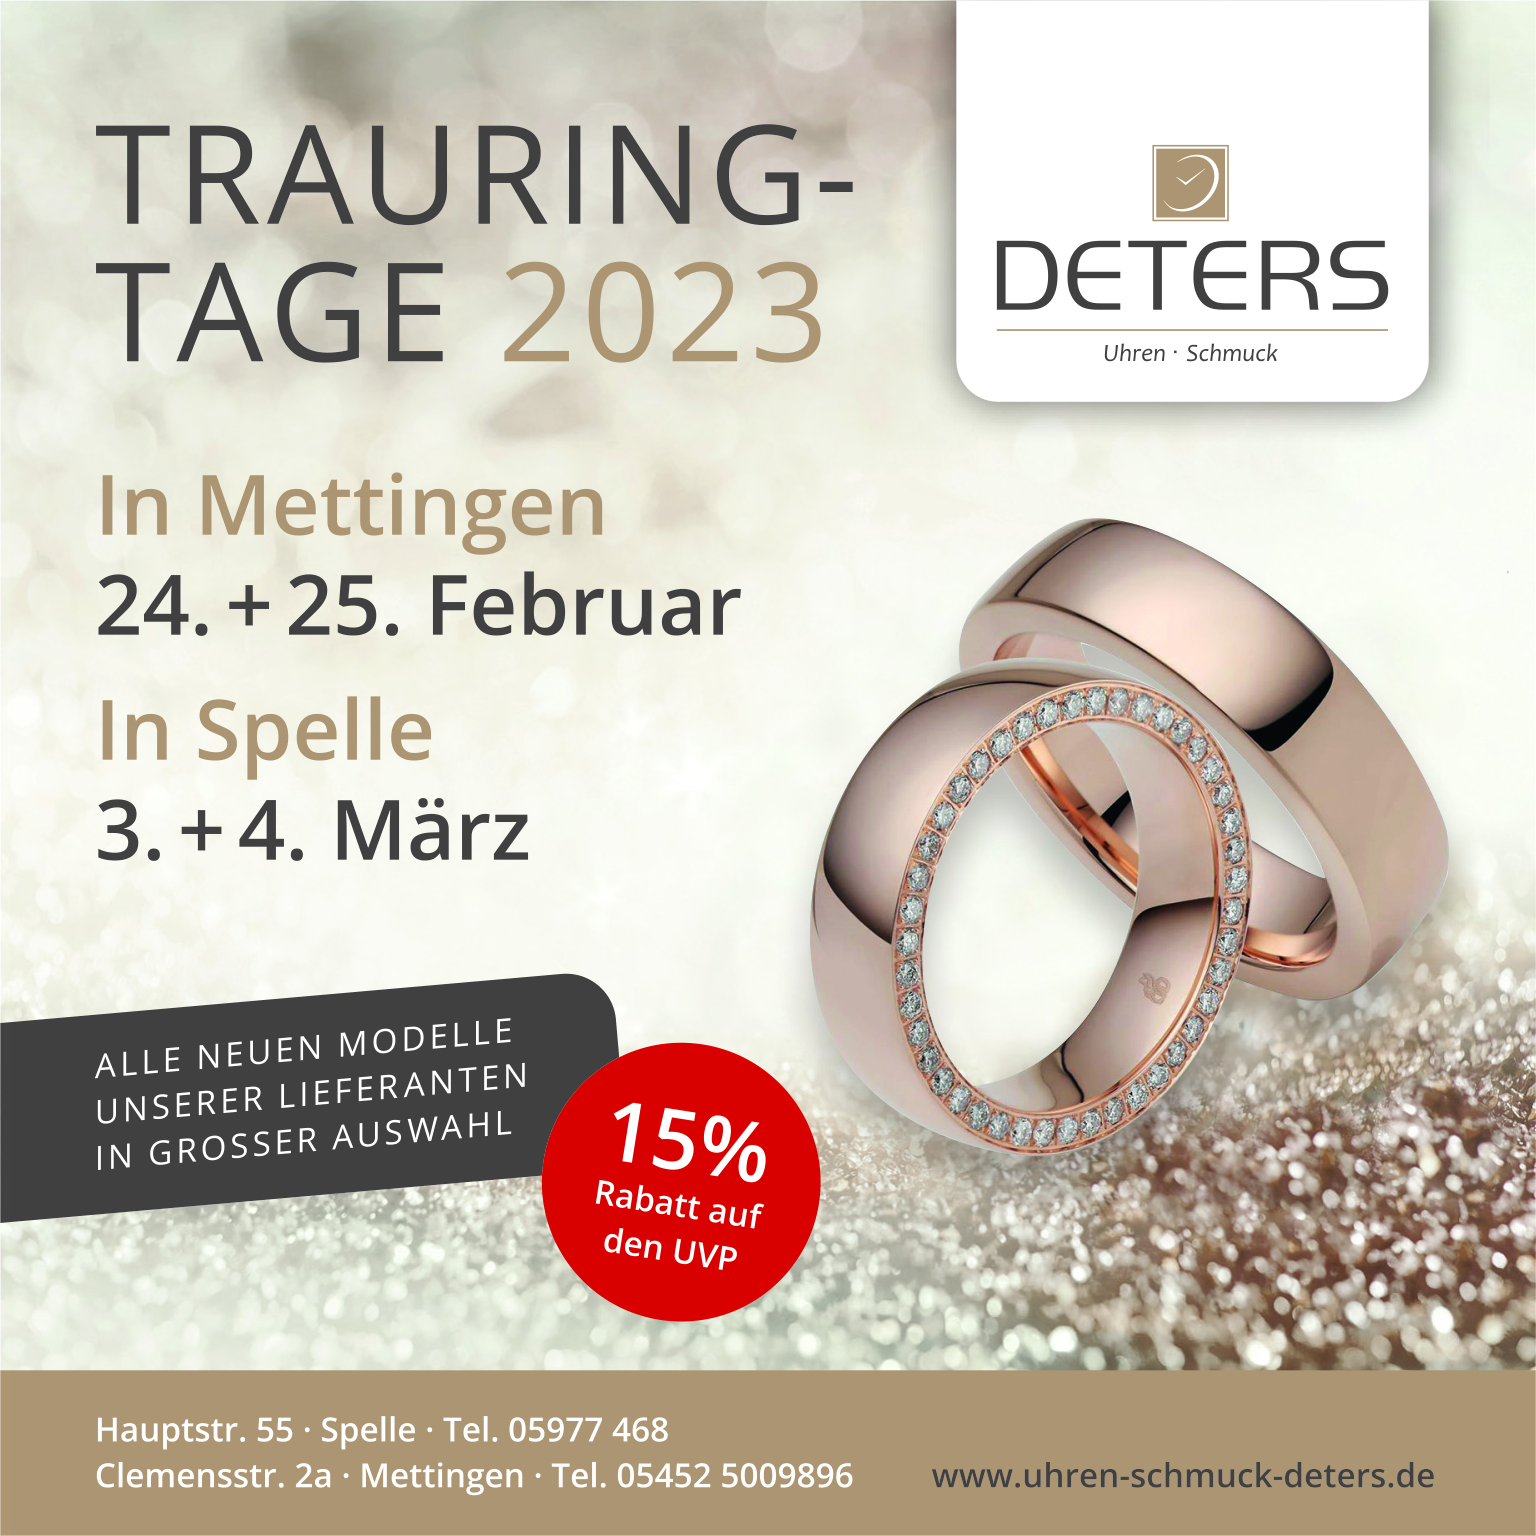 Frühlingstrauringtage 2023 in Mettingen und Spelle